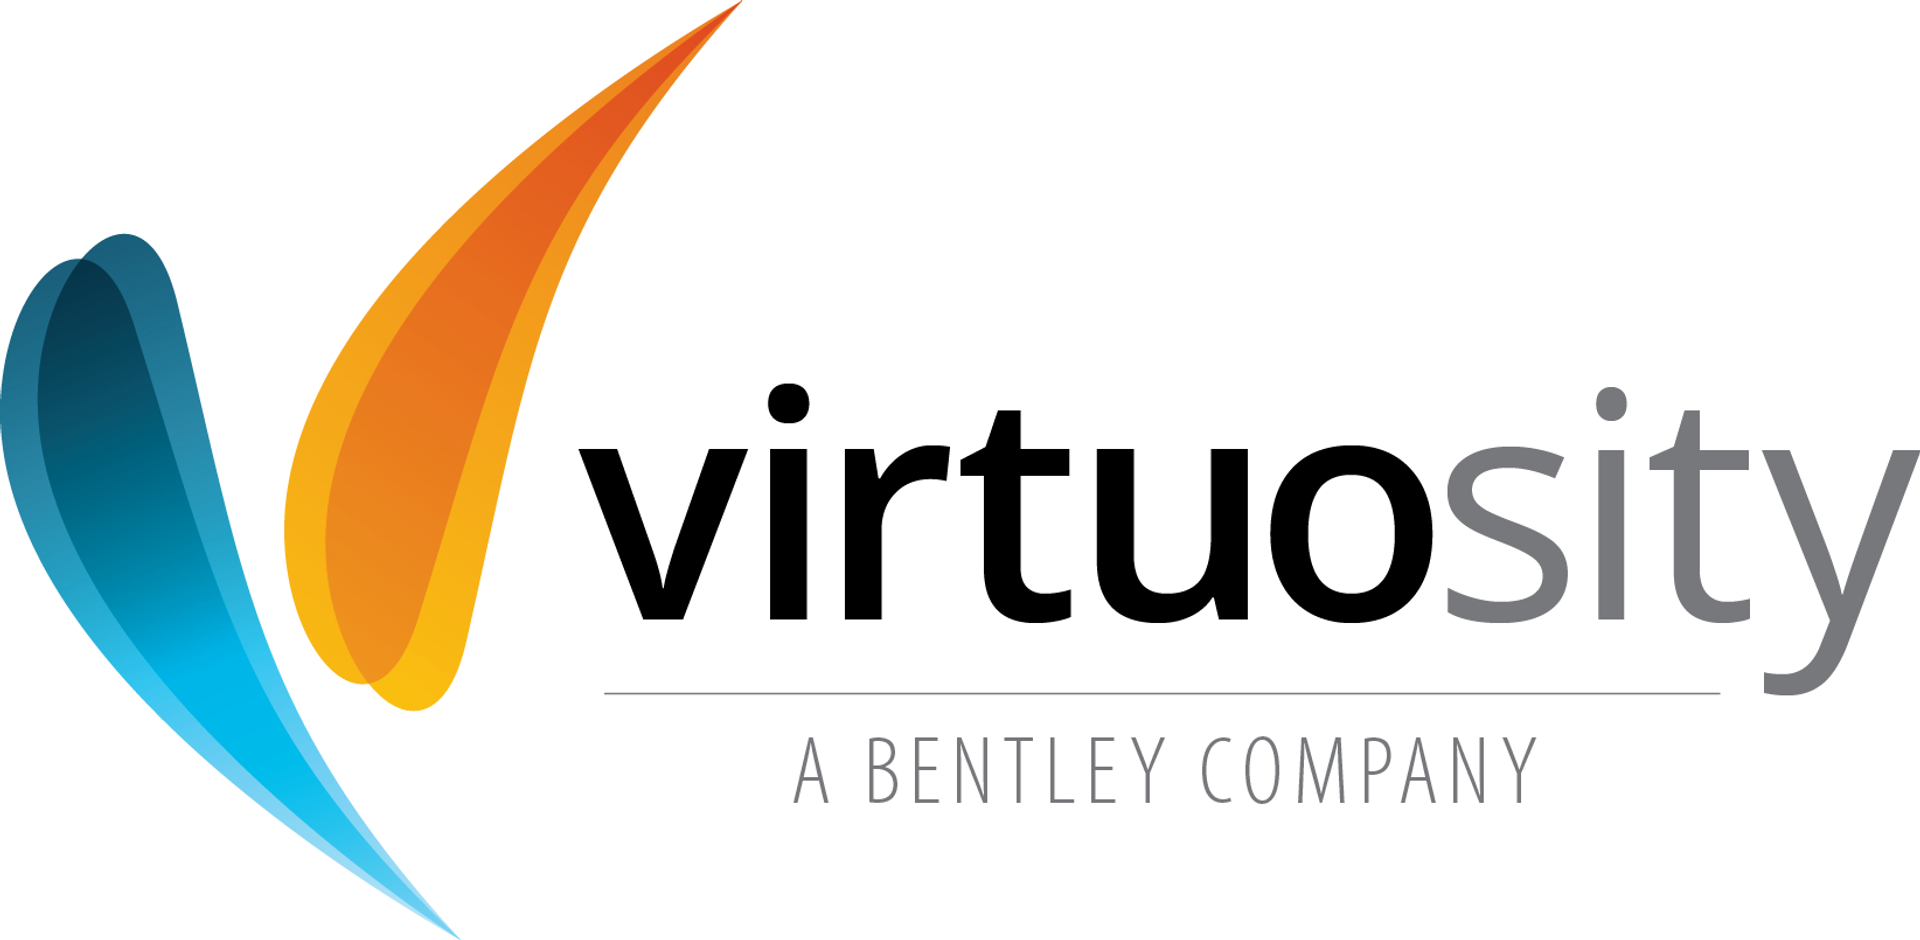 Virtuosity, A Bentley Company